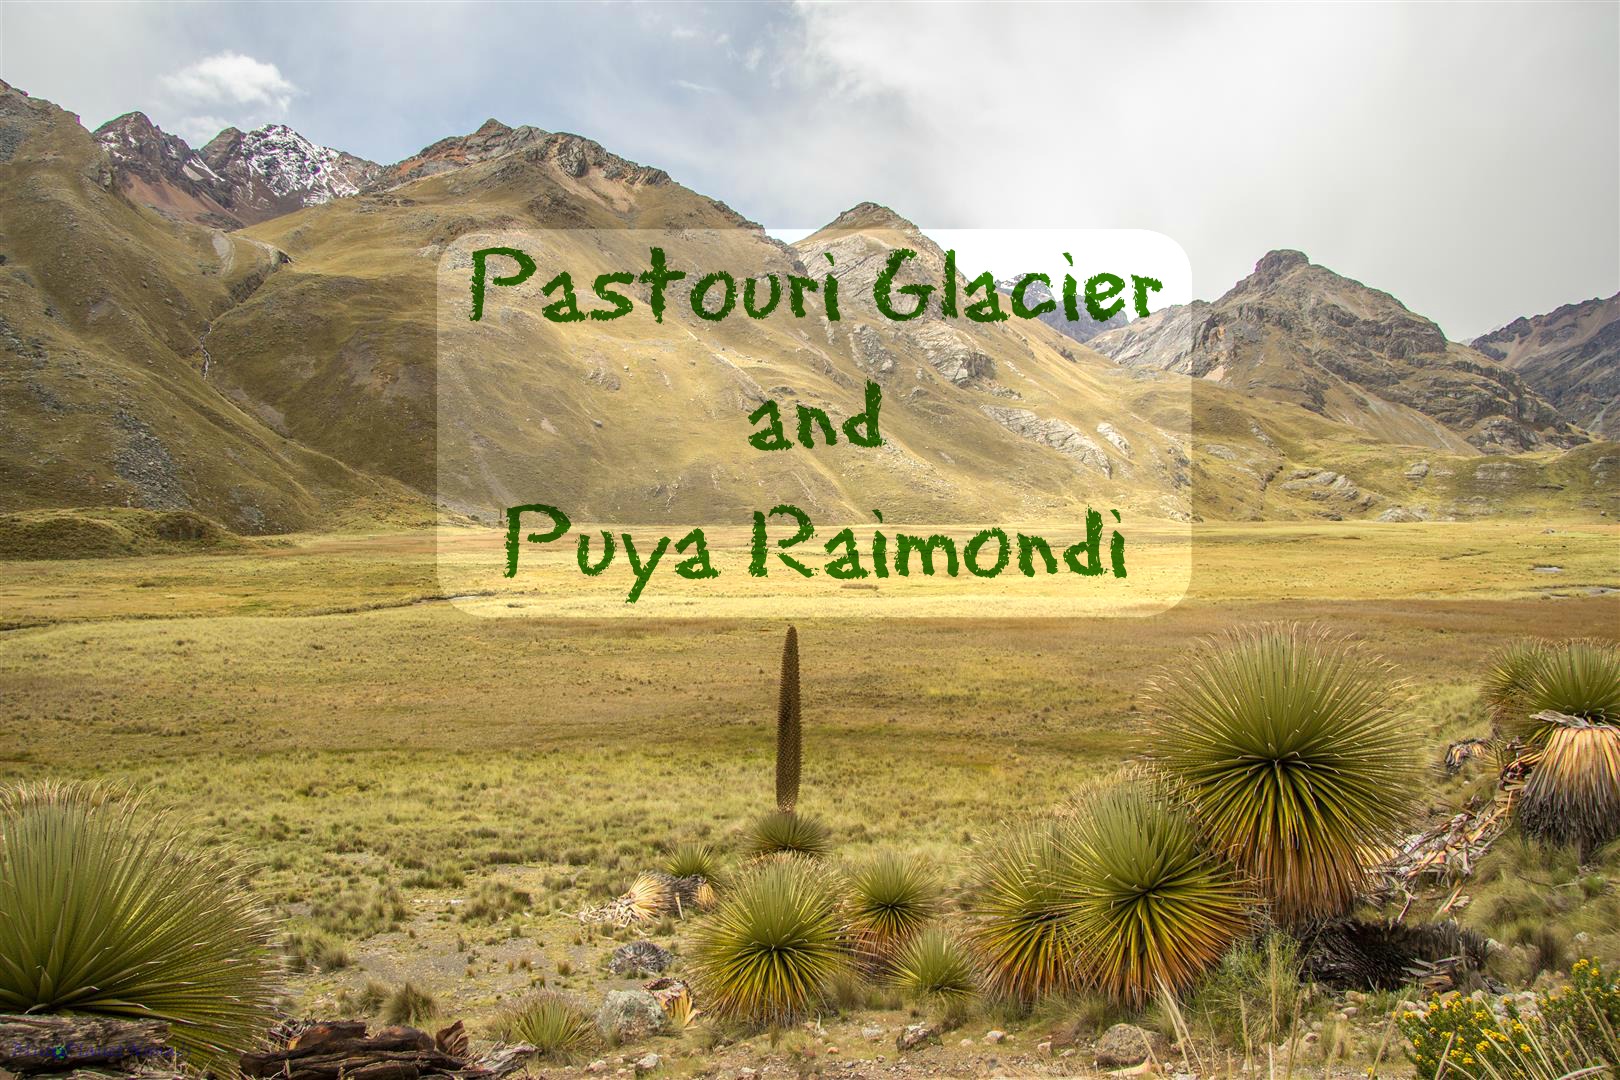 Pastouri Glacier and Puya Raimondi